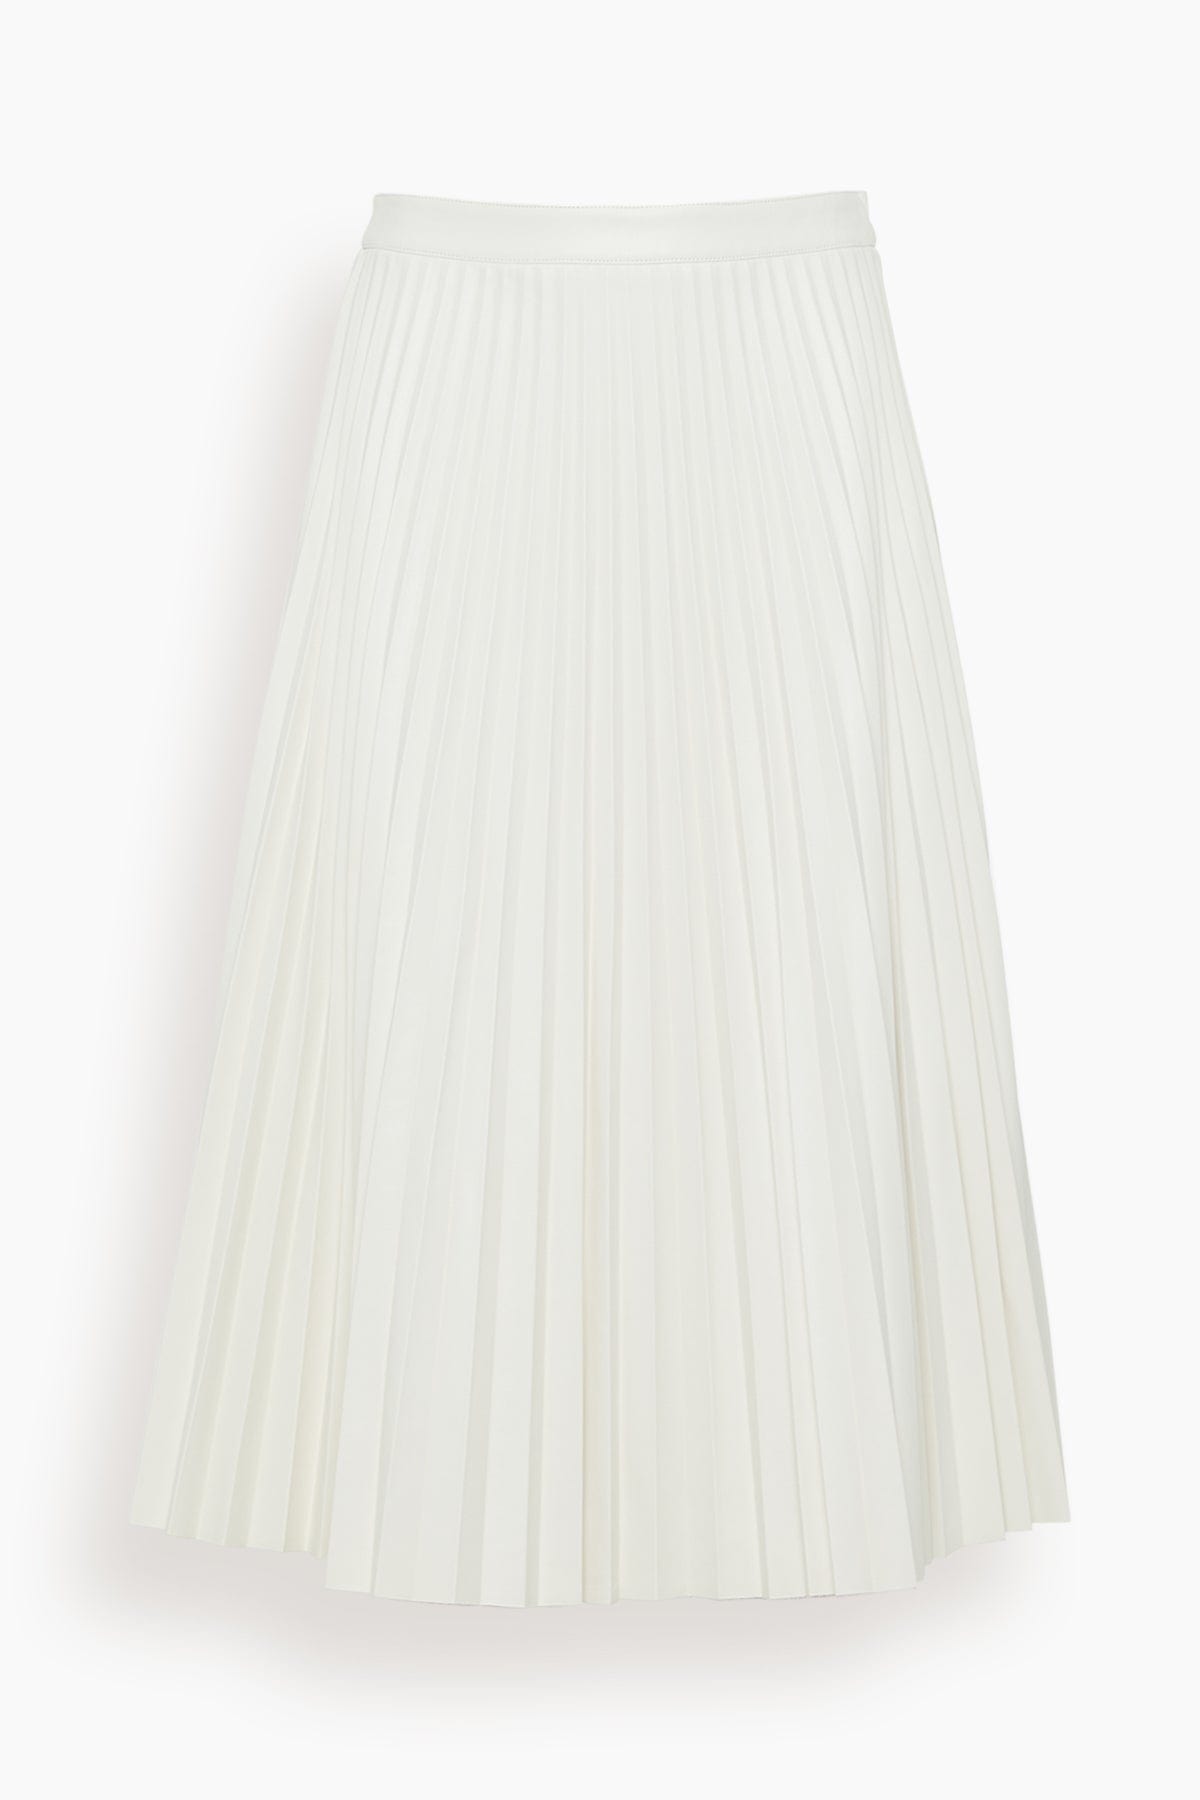 Proenza Schouler White Label Daphne Skirt in Off White - White - Size: 0